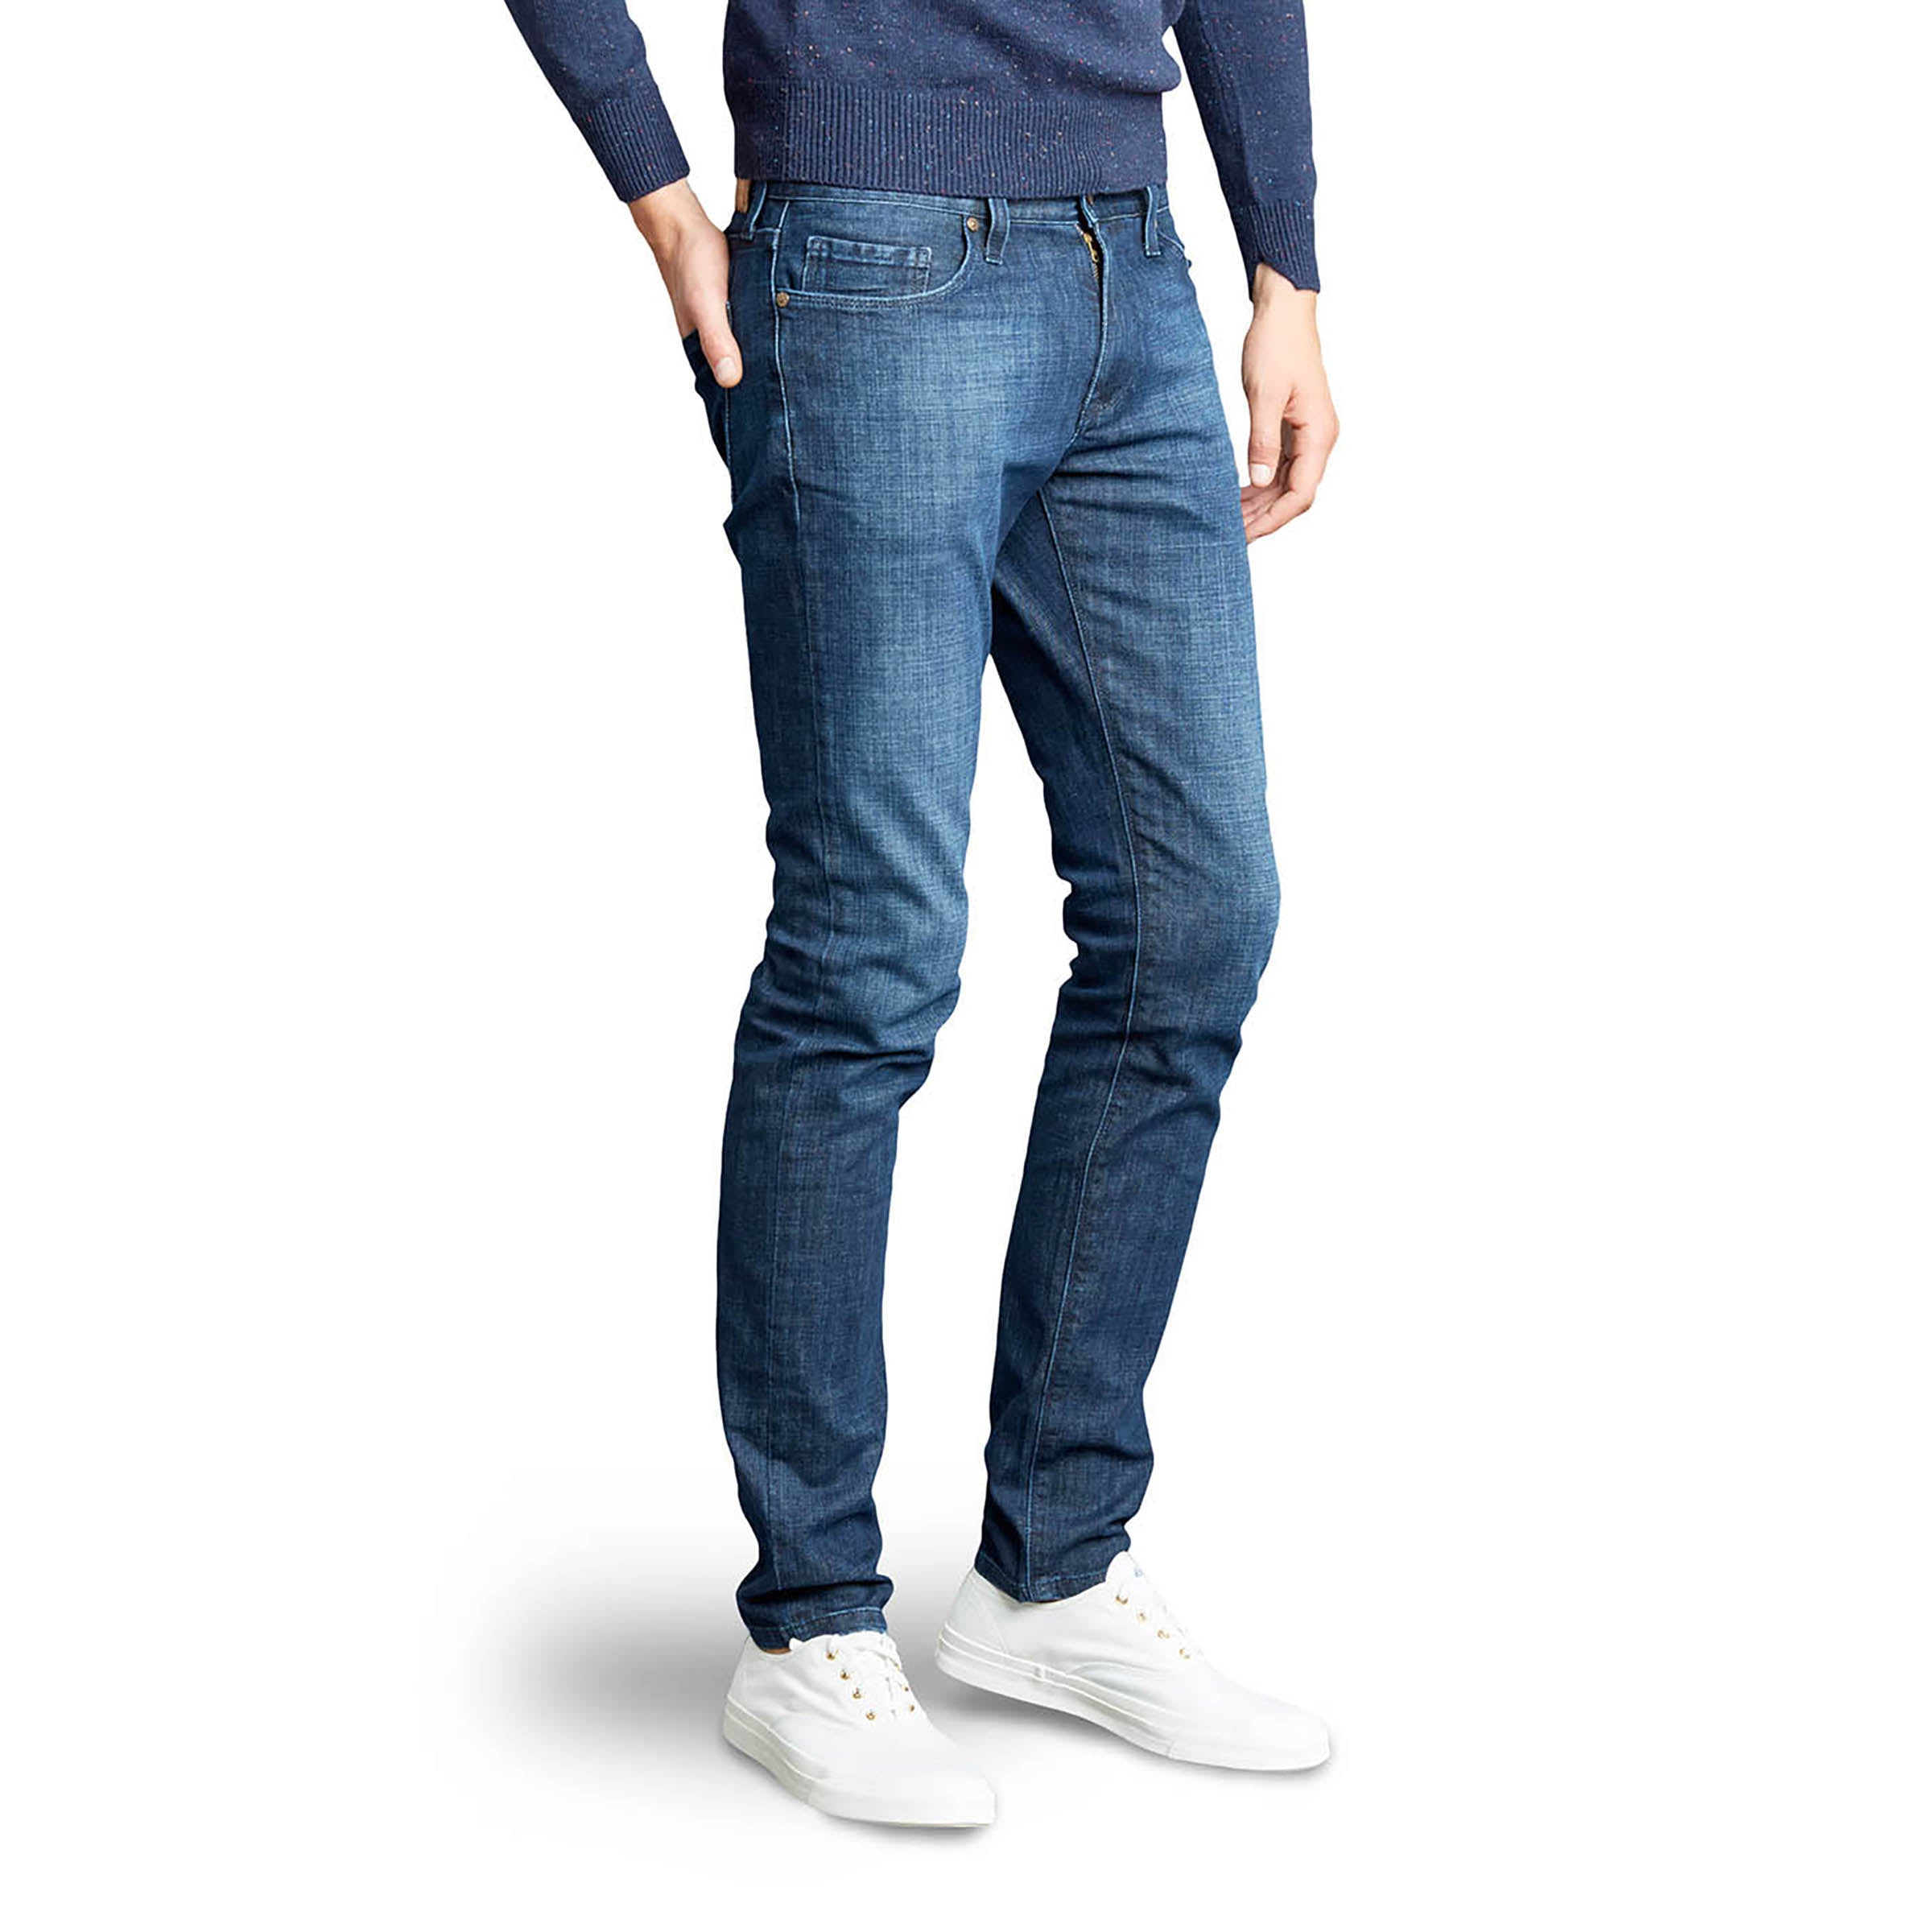 Men wearing Medium Blue Skinny Mosco Jeans